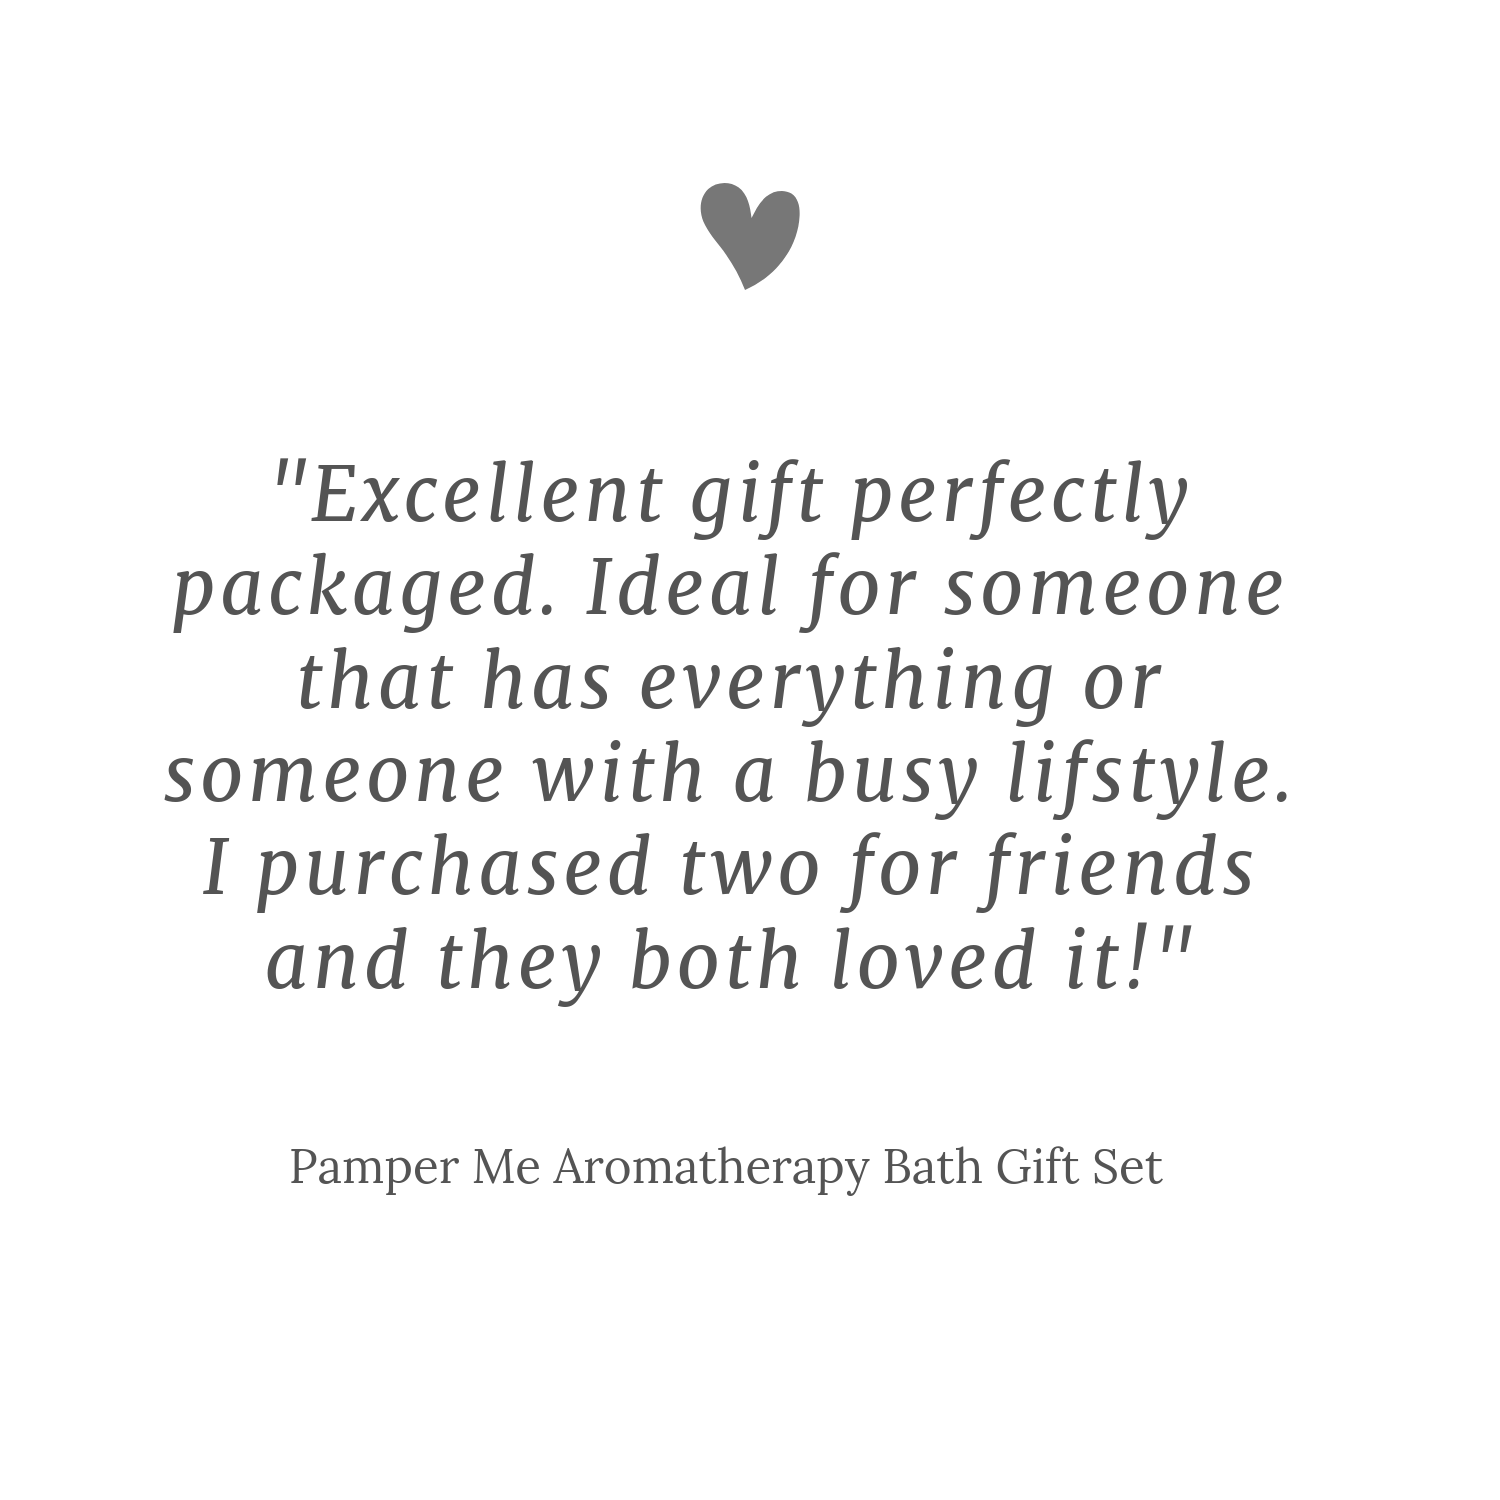 Pamper Me aromatherapy bath gift, best selling gift set, vegan bath gift, cruelty free